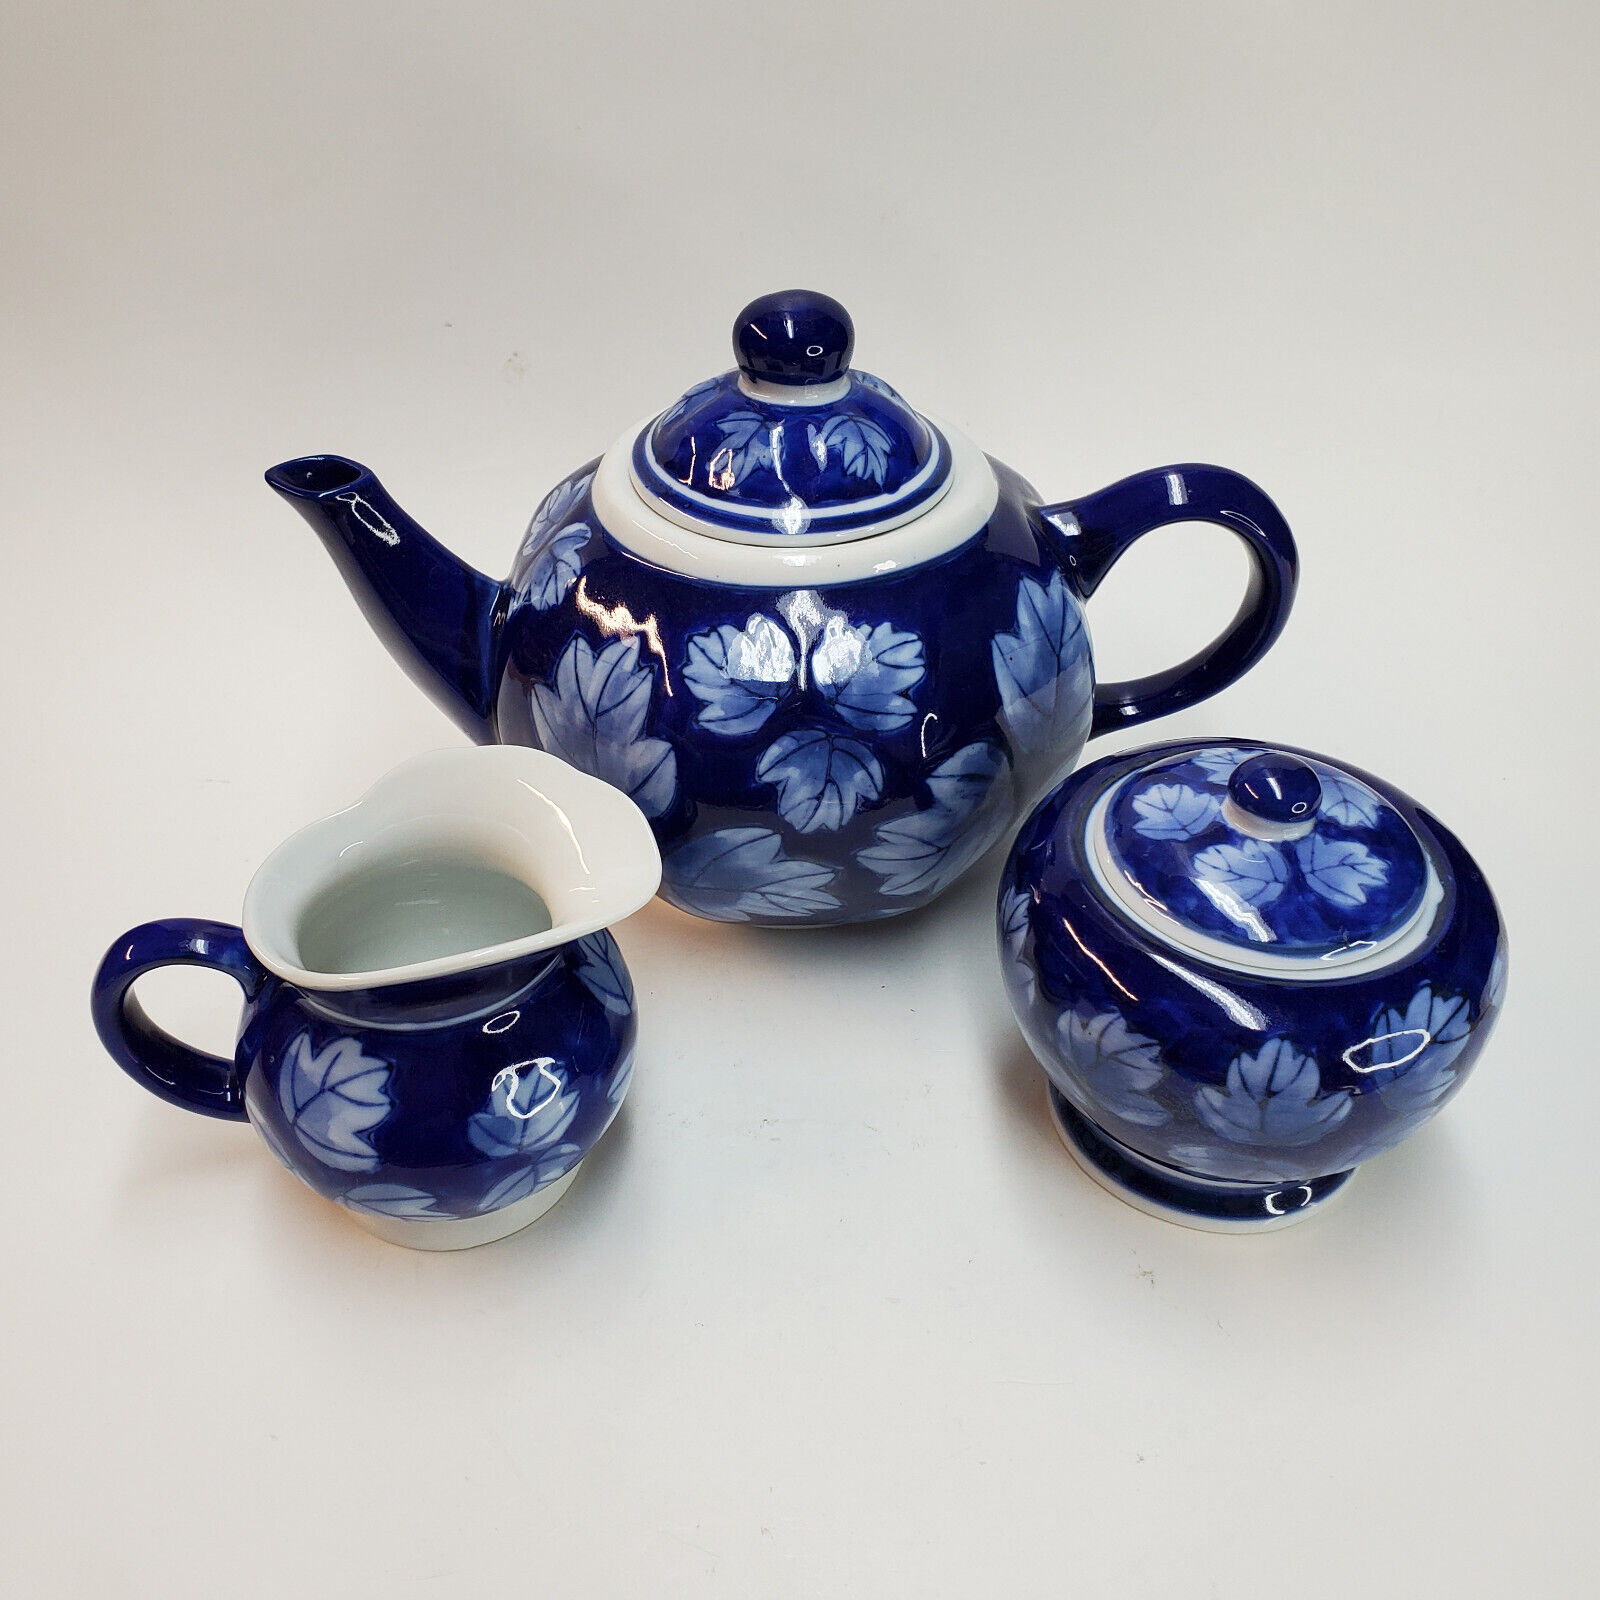 Designpac Cobalt Blue Leaf Pattern Ceramic Teapot with Matching Sugar, Cream